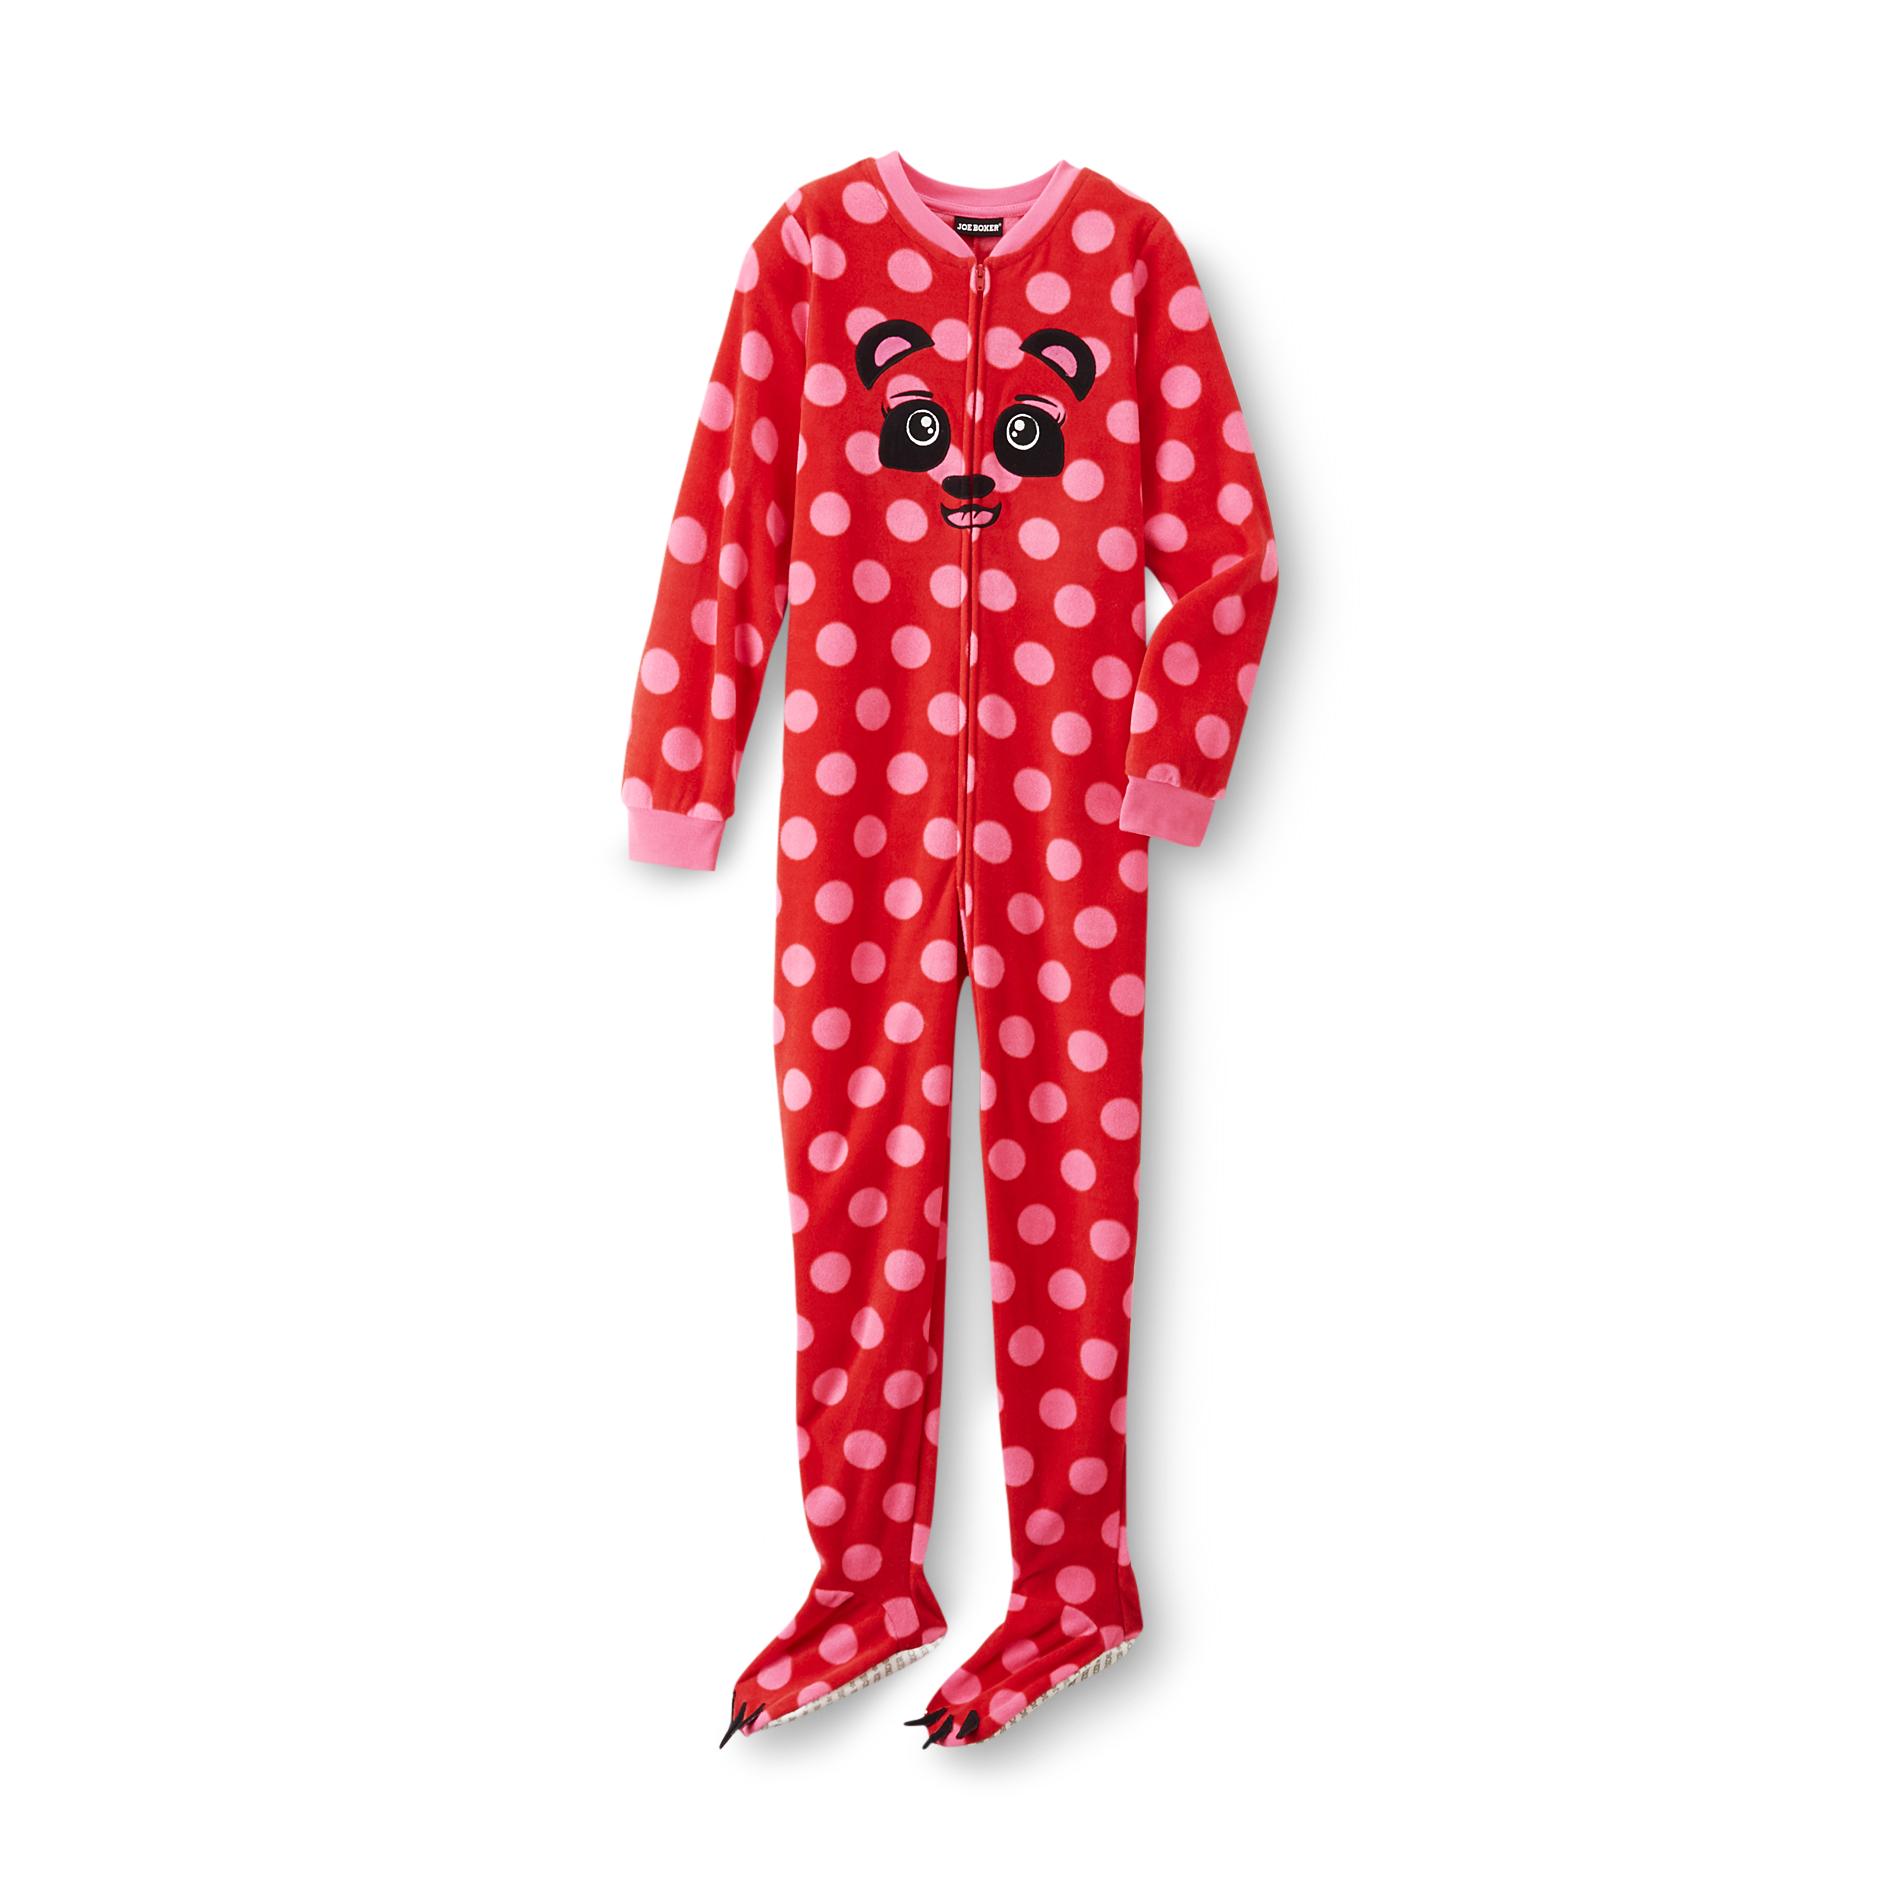 Joe Boxer Girl's Fleece Footed Pajamas - Panda